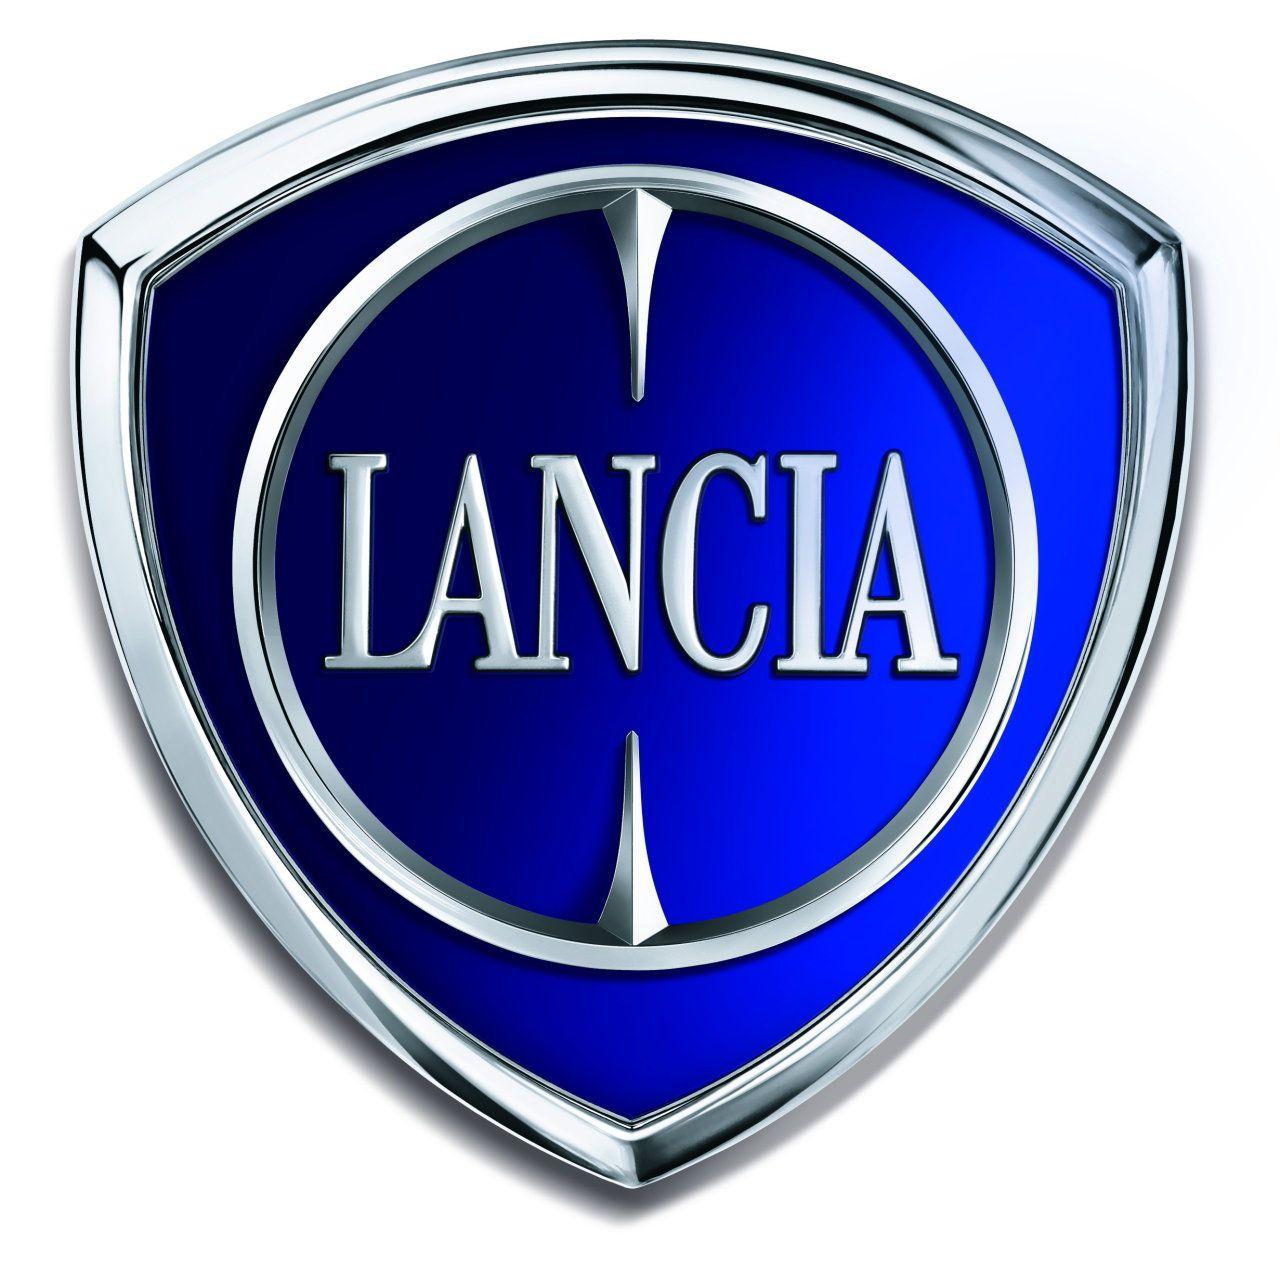 A F in Shield Car Logo - Lancia Logo, Lancia Car Symbol Meaning and History | Car Brand Names.com